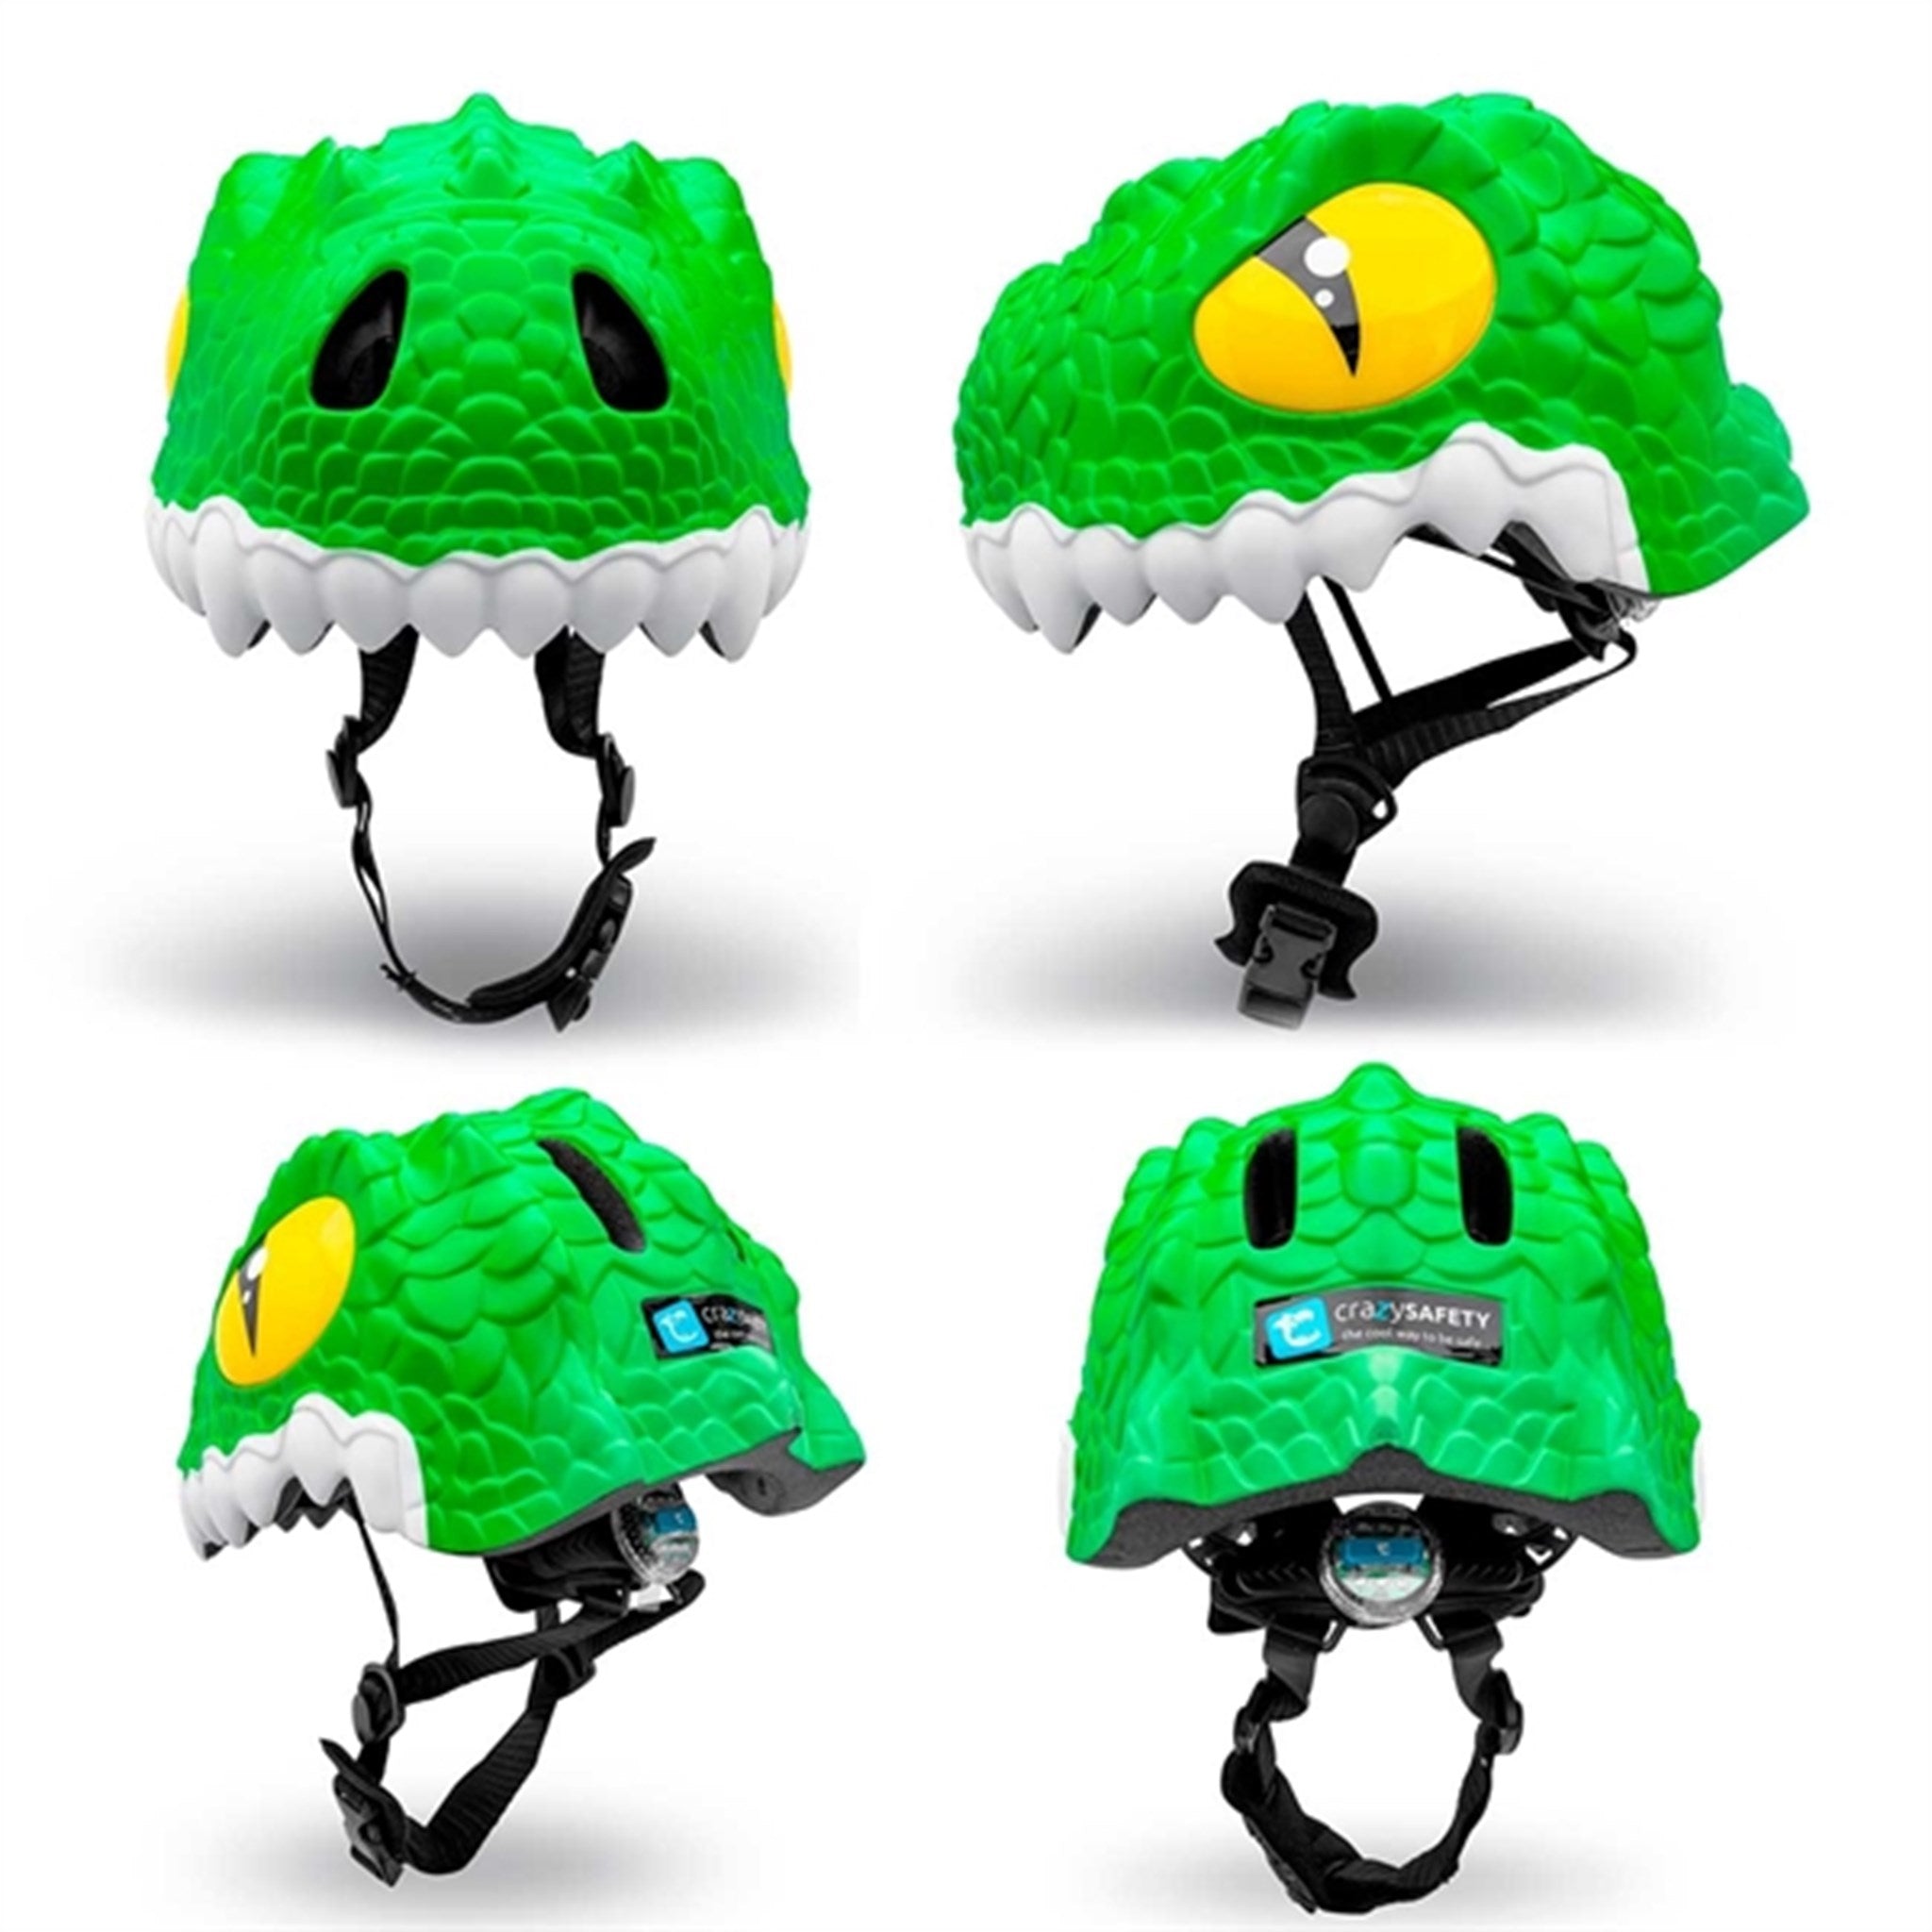 Crazy Safety Crocodile Bicycle Helmet Green 4